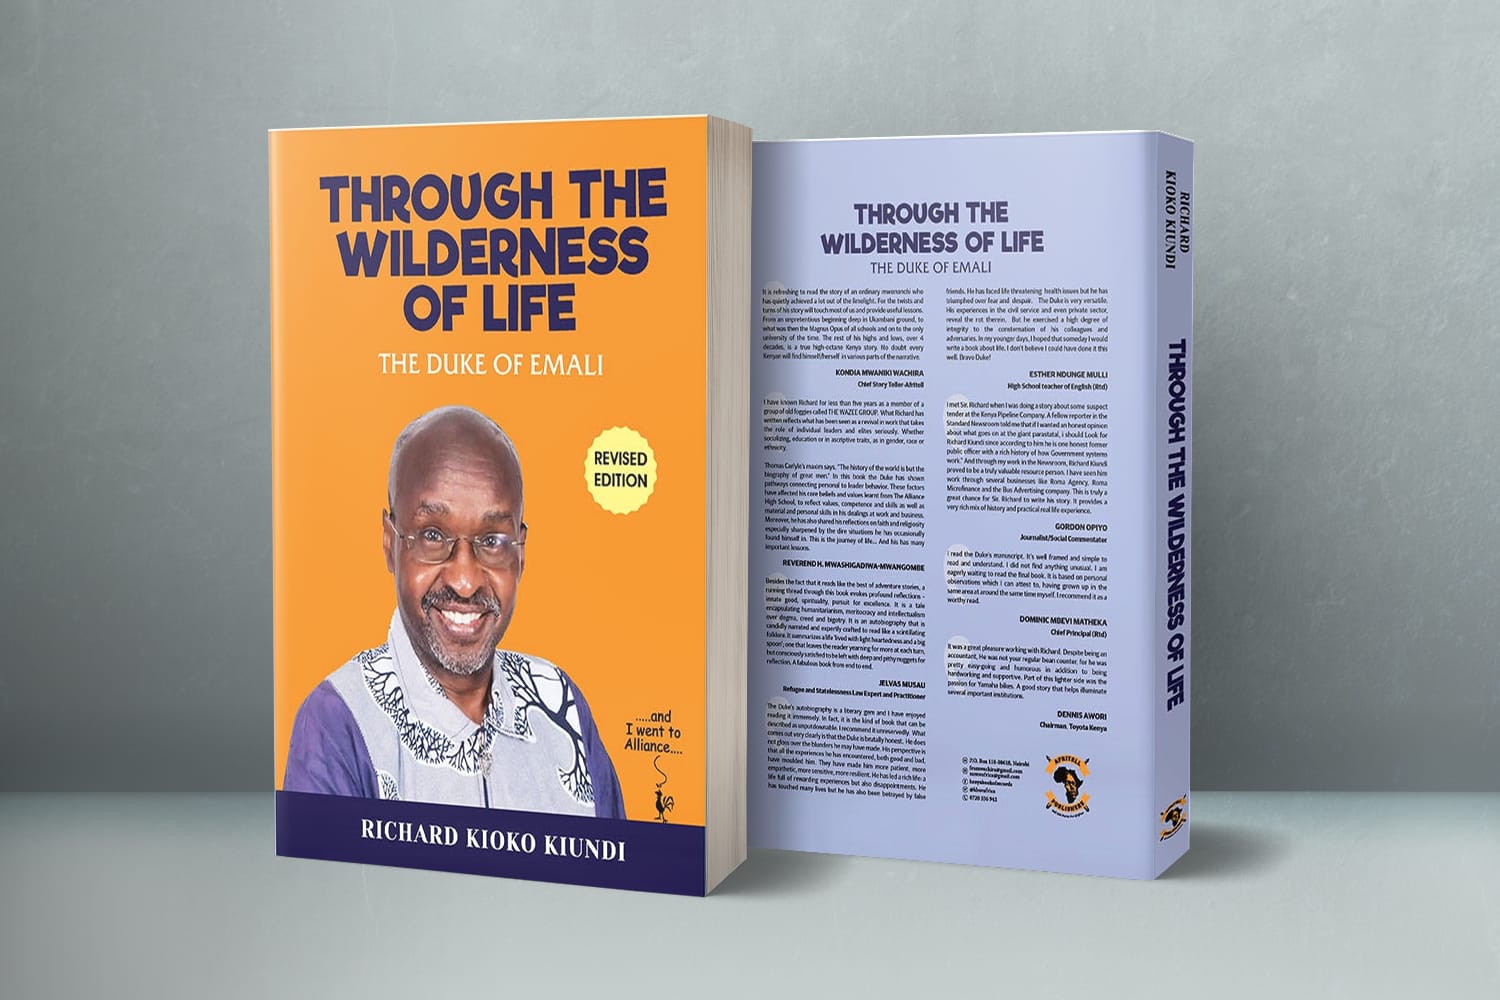 Autobiography of Richard Kiundi AKA The Duke of Emali